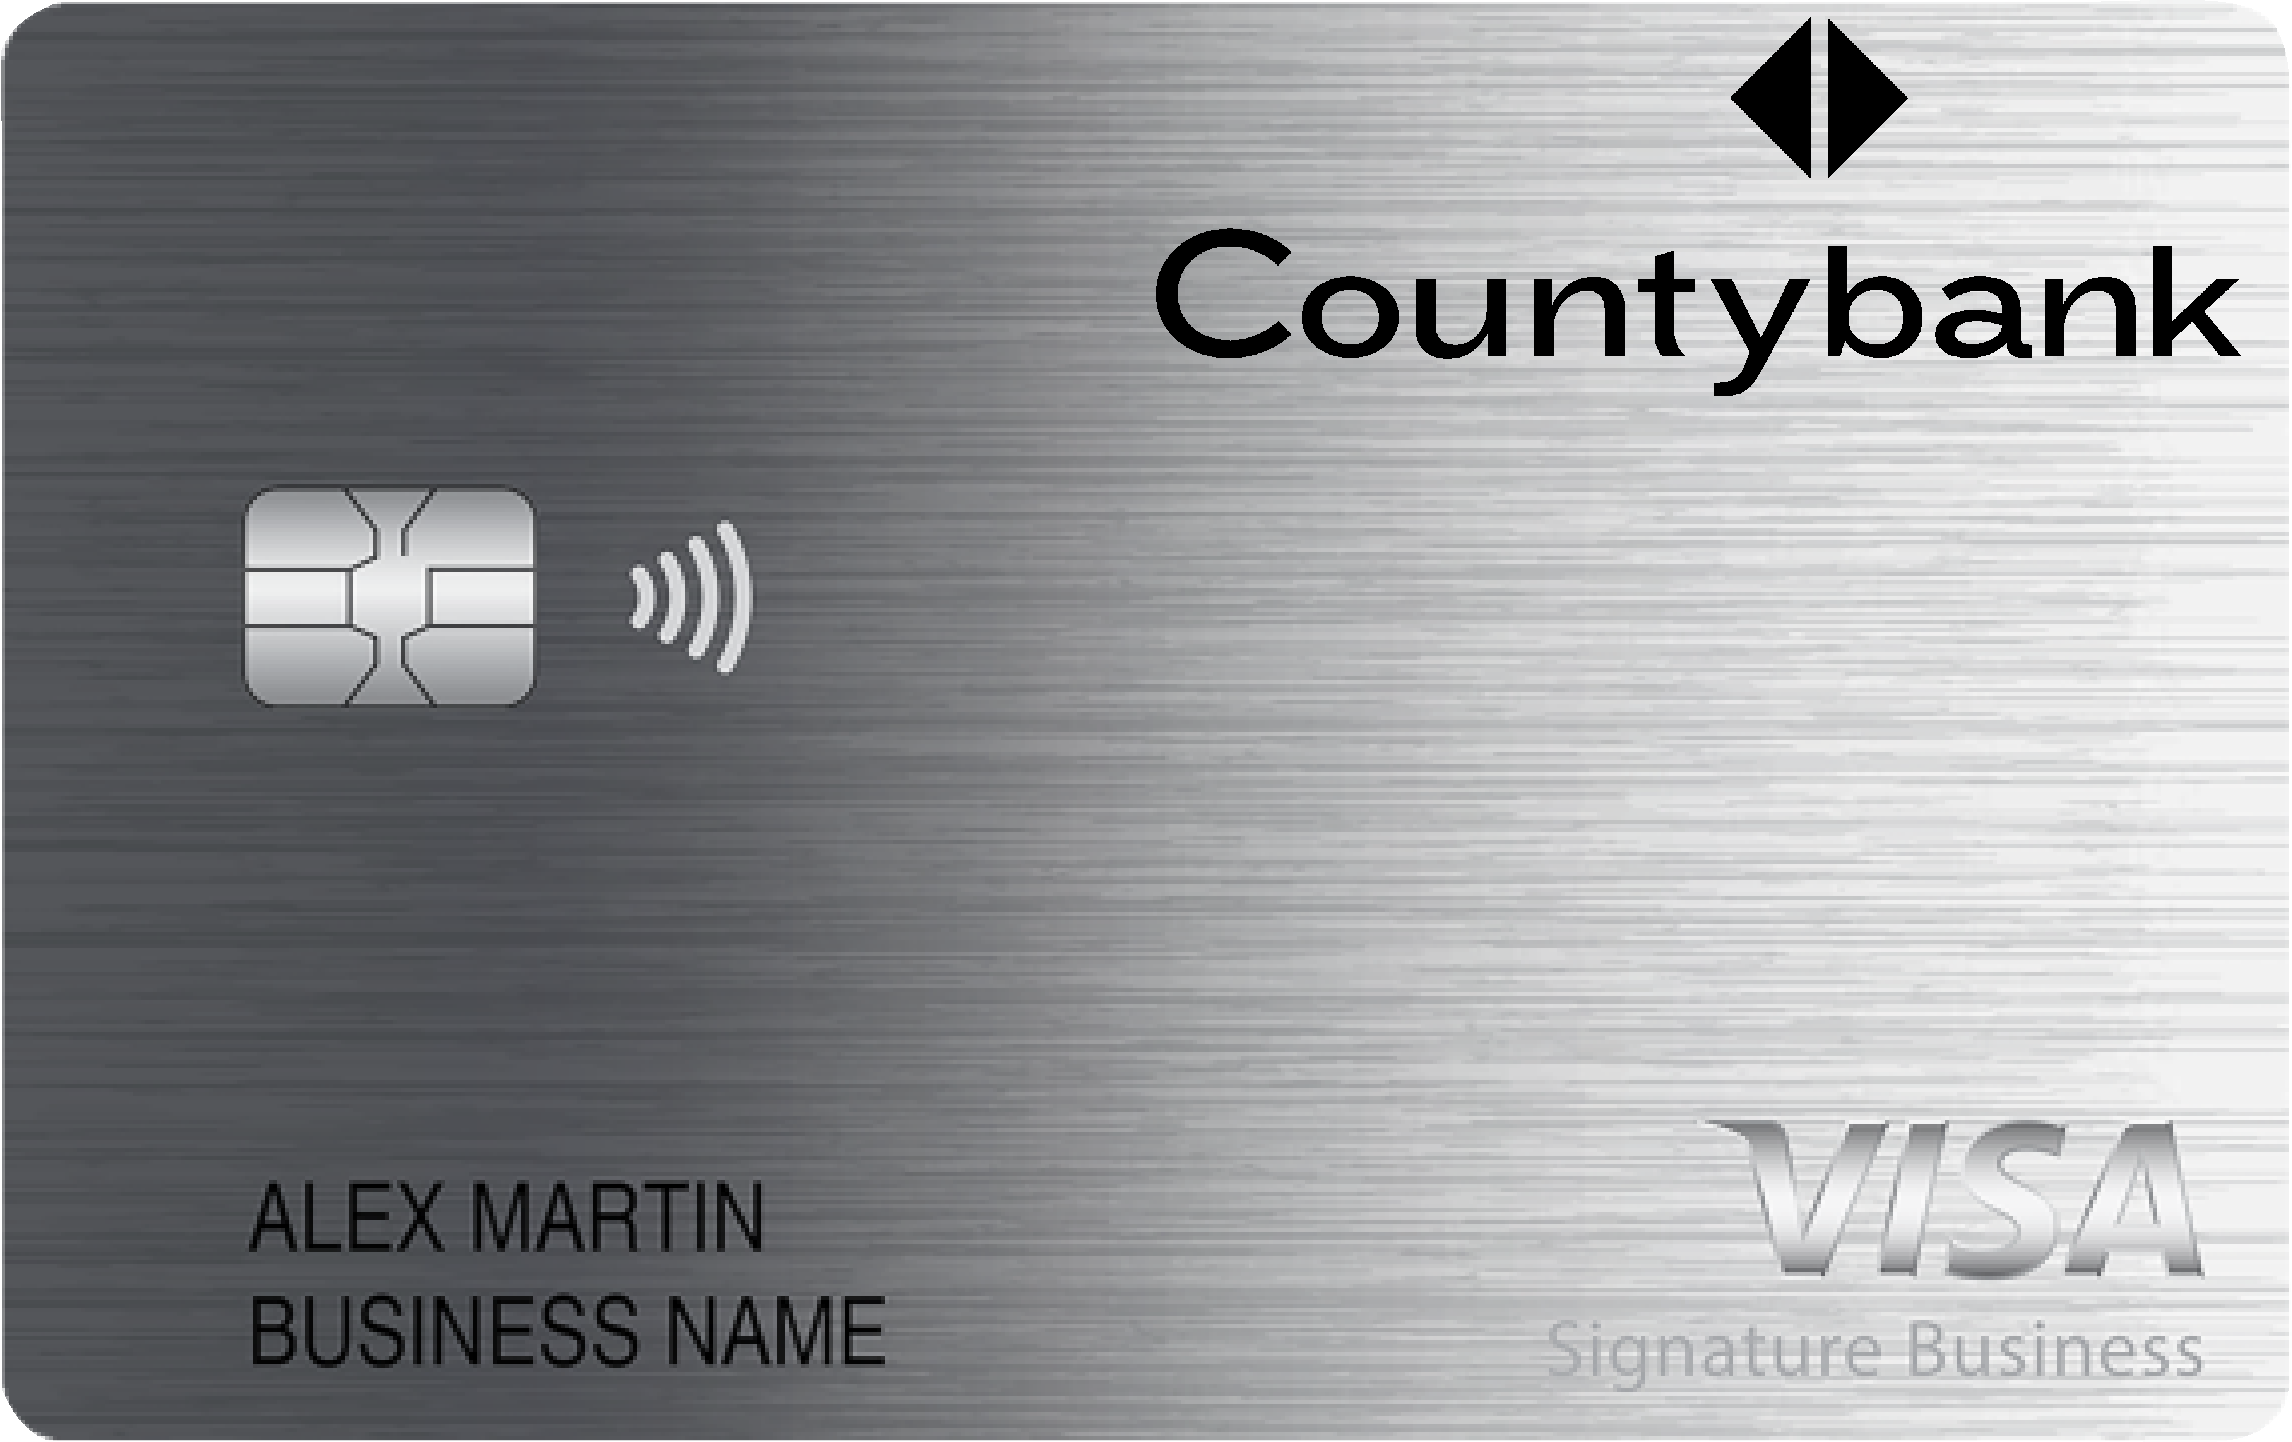 Countybank Smart Business Rewards Card